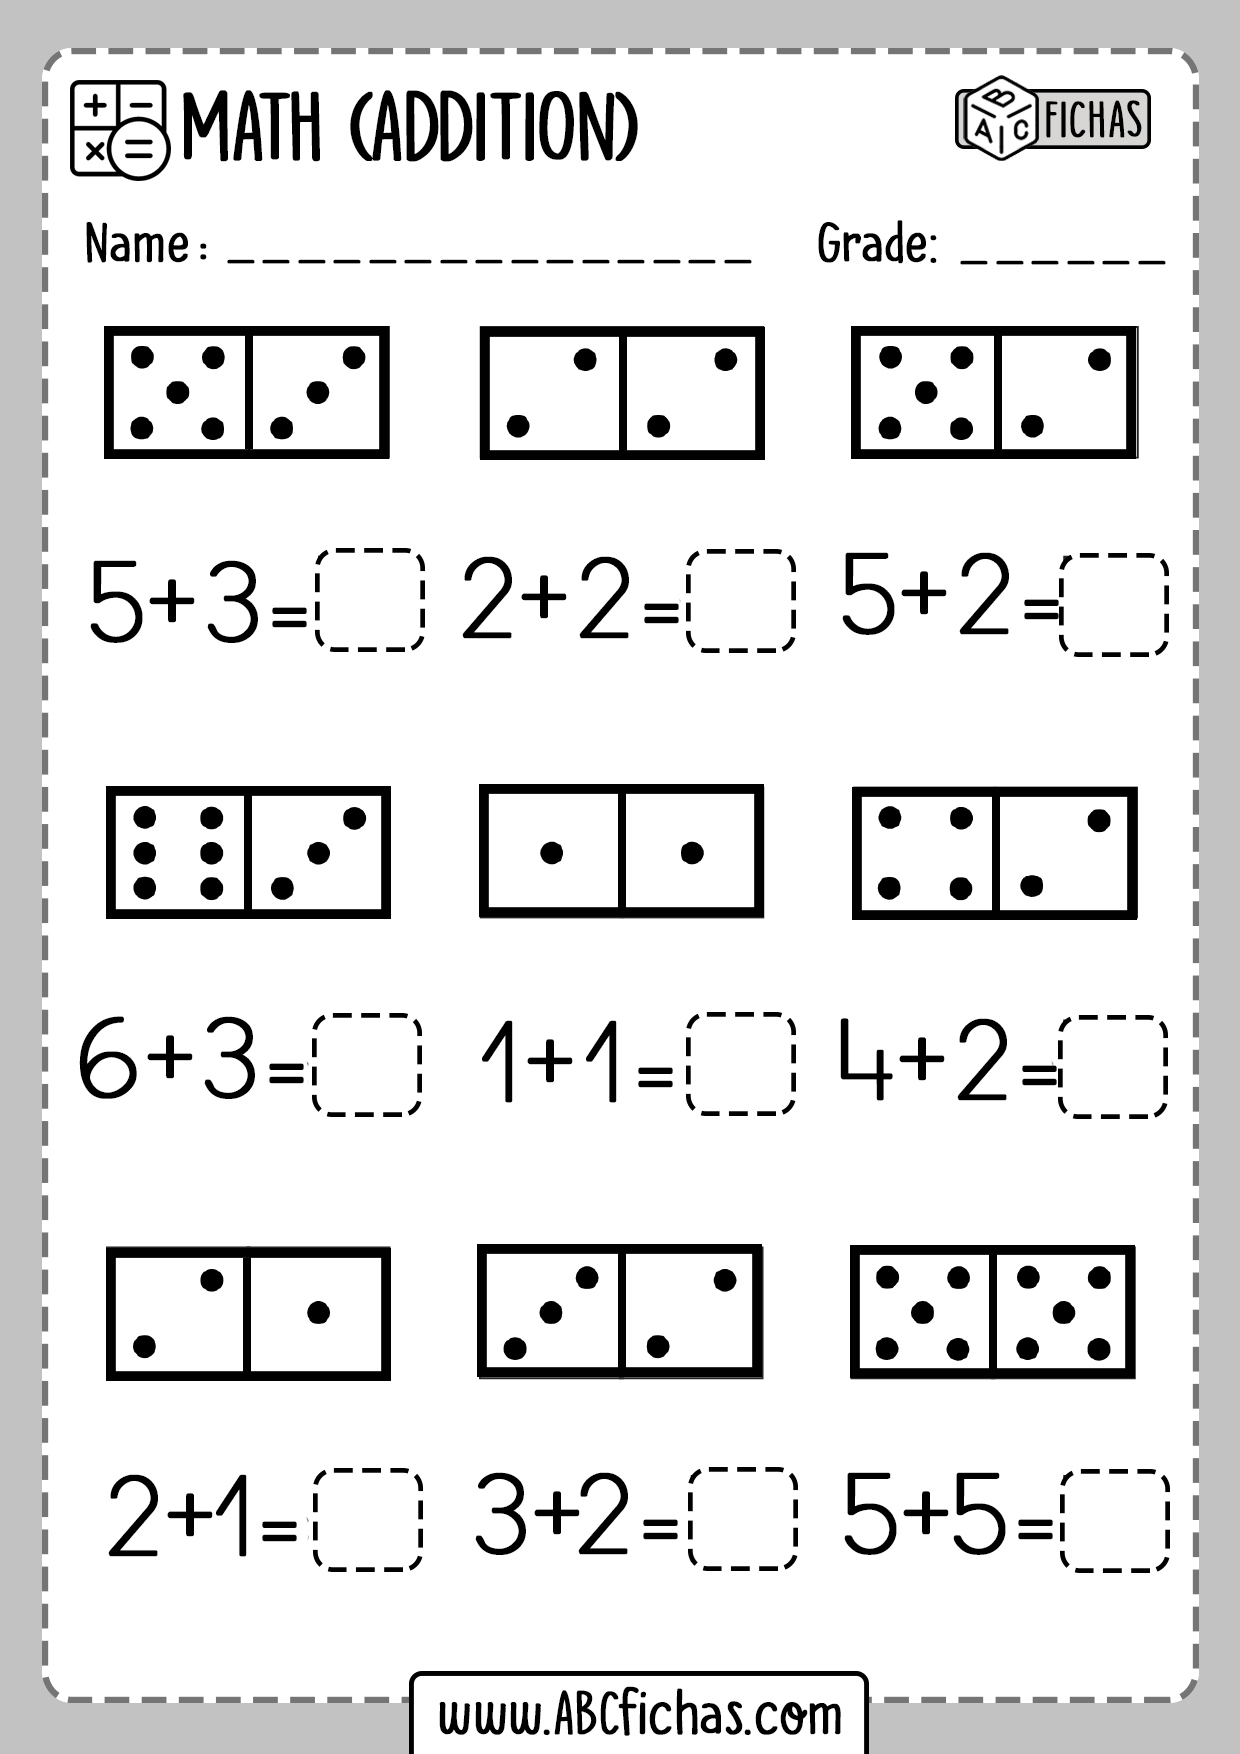 domino-addition-worksheet-abc-fichas